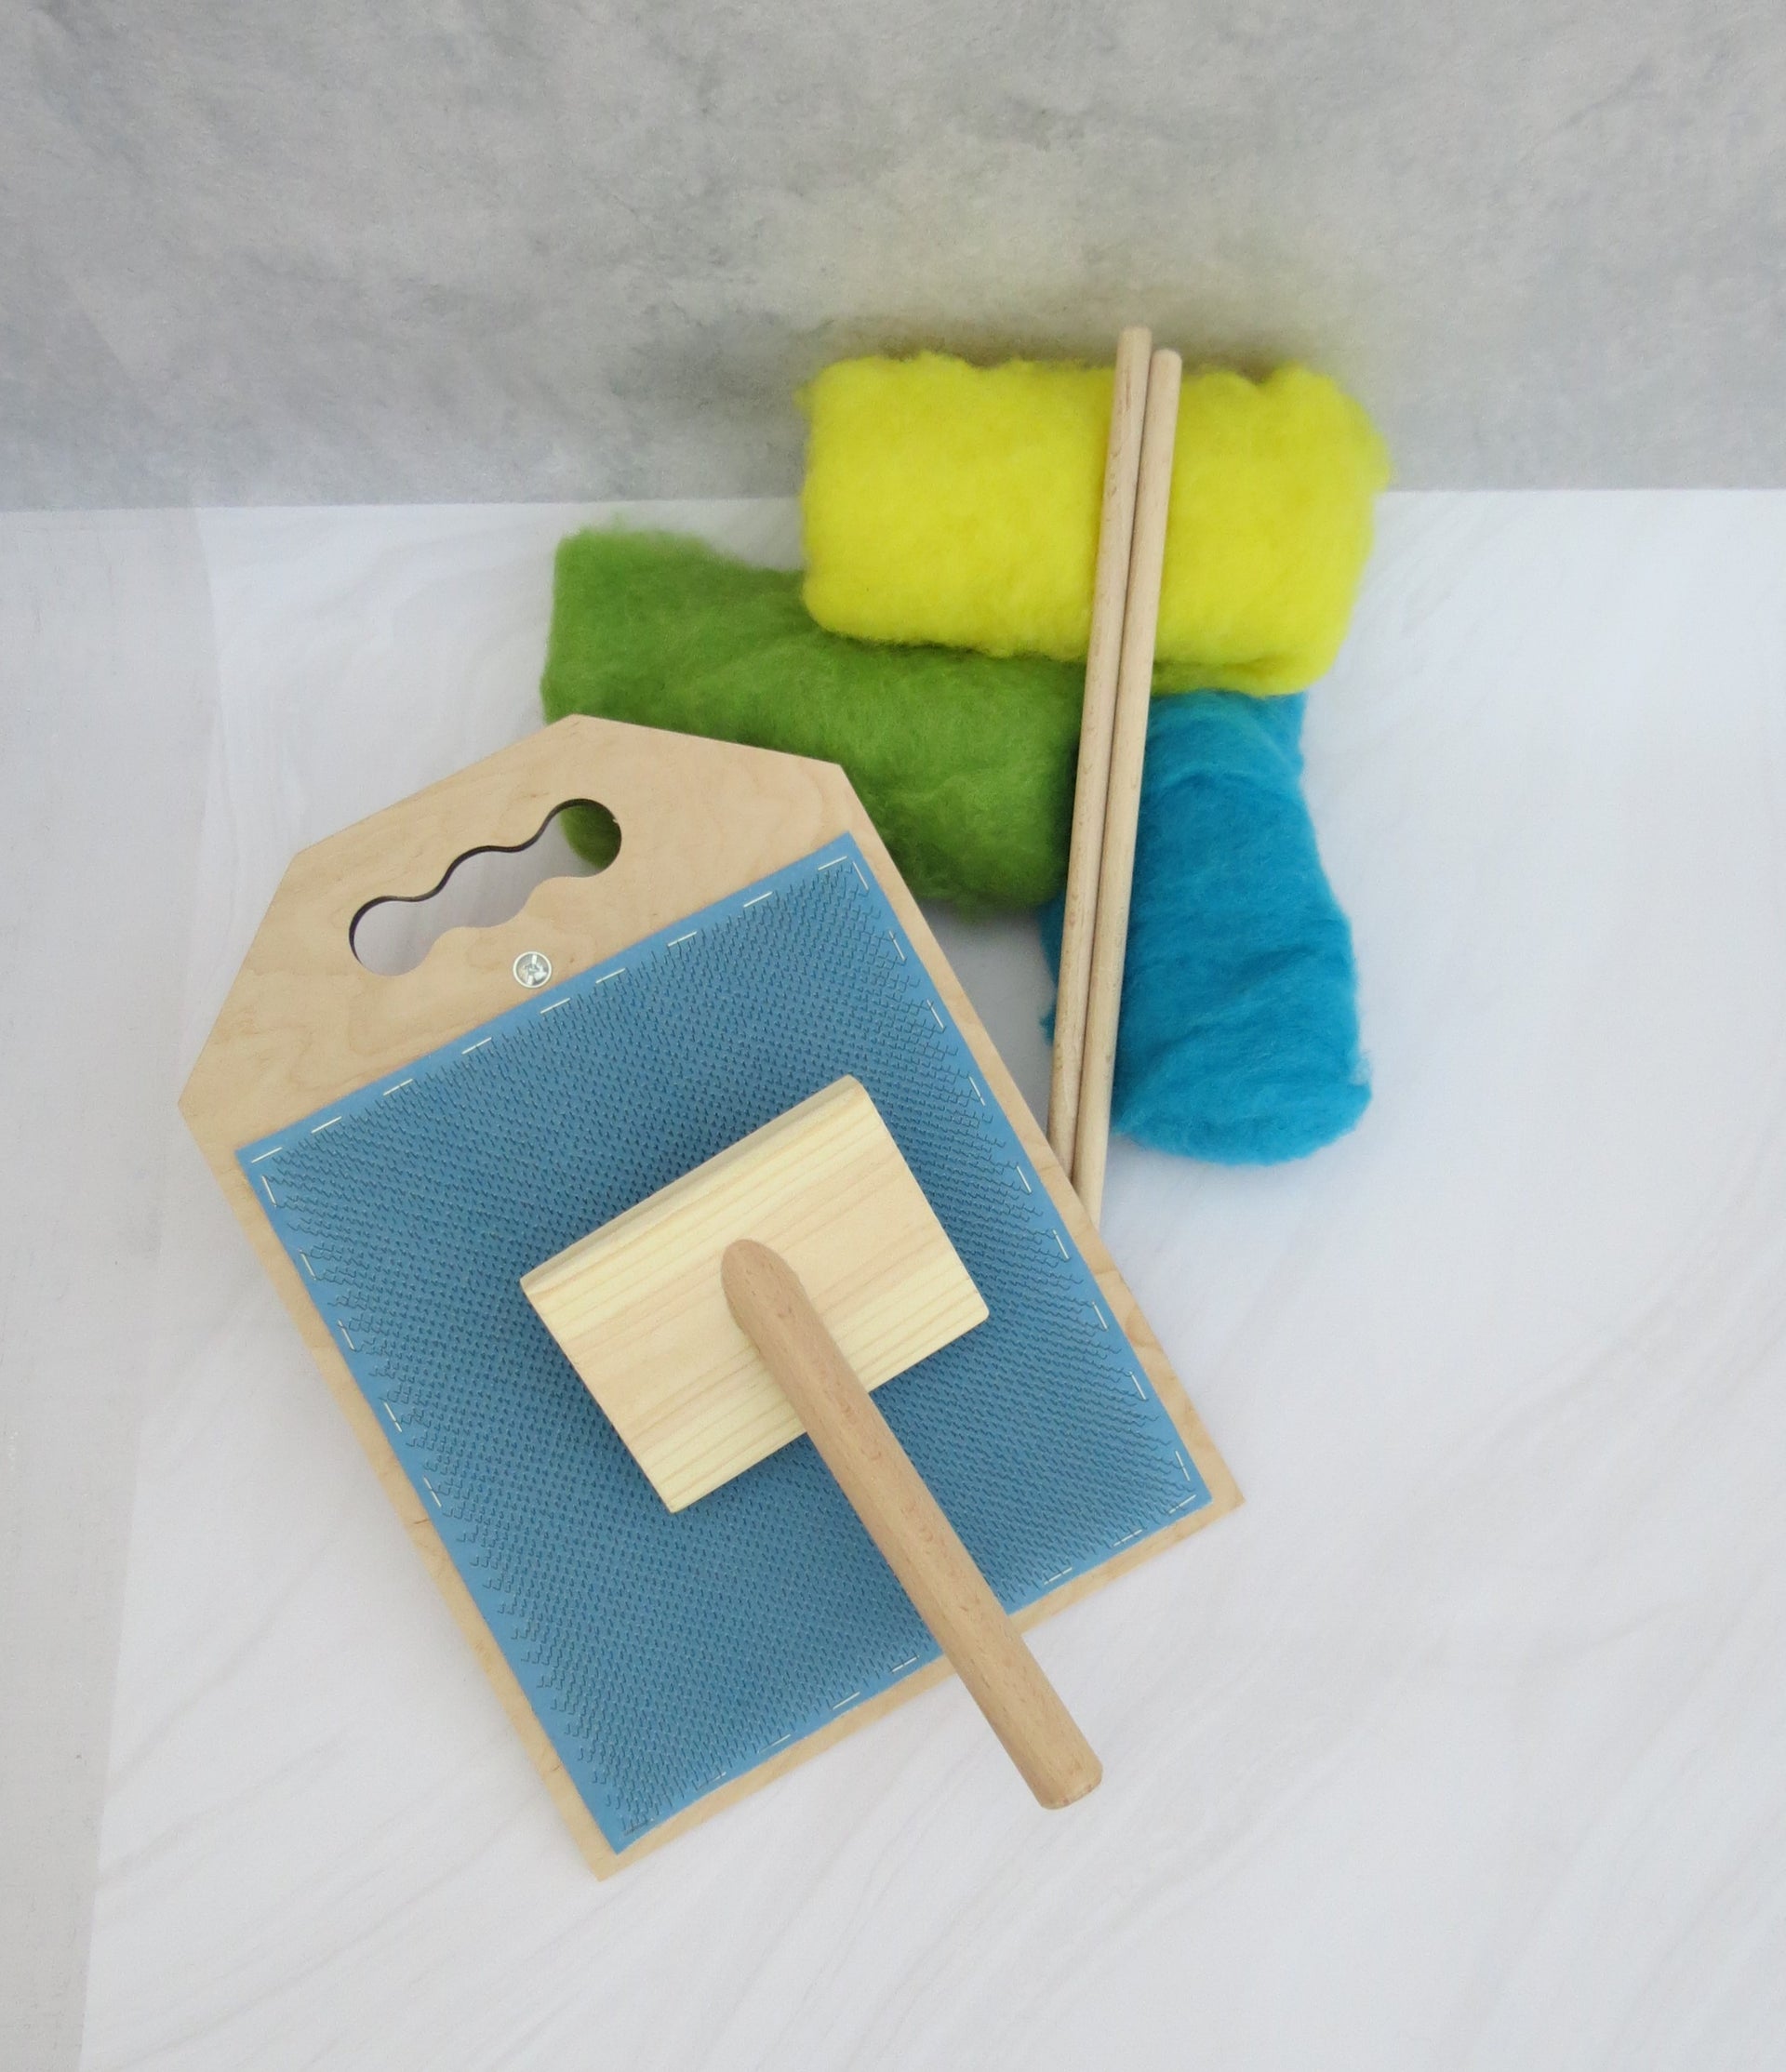 Wooden Drum Carder for Wool Fiber Combing Cardings Blending Board 72 Tpi, wool Picker M&V 